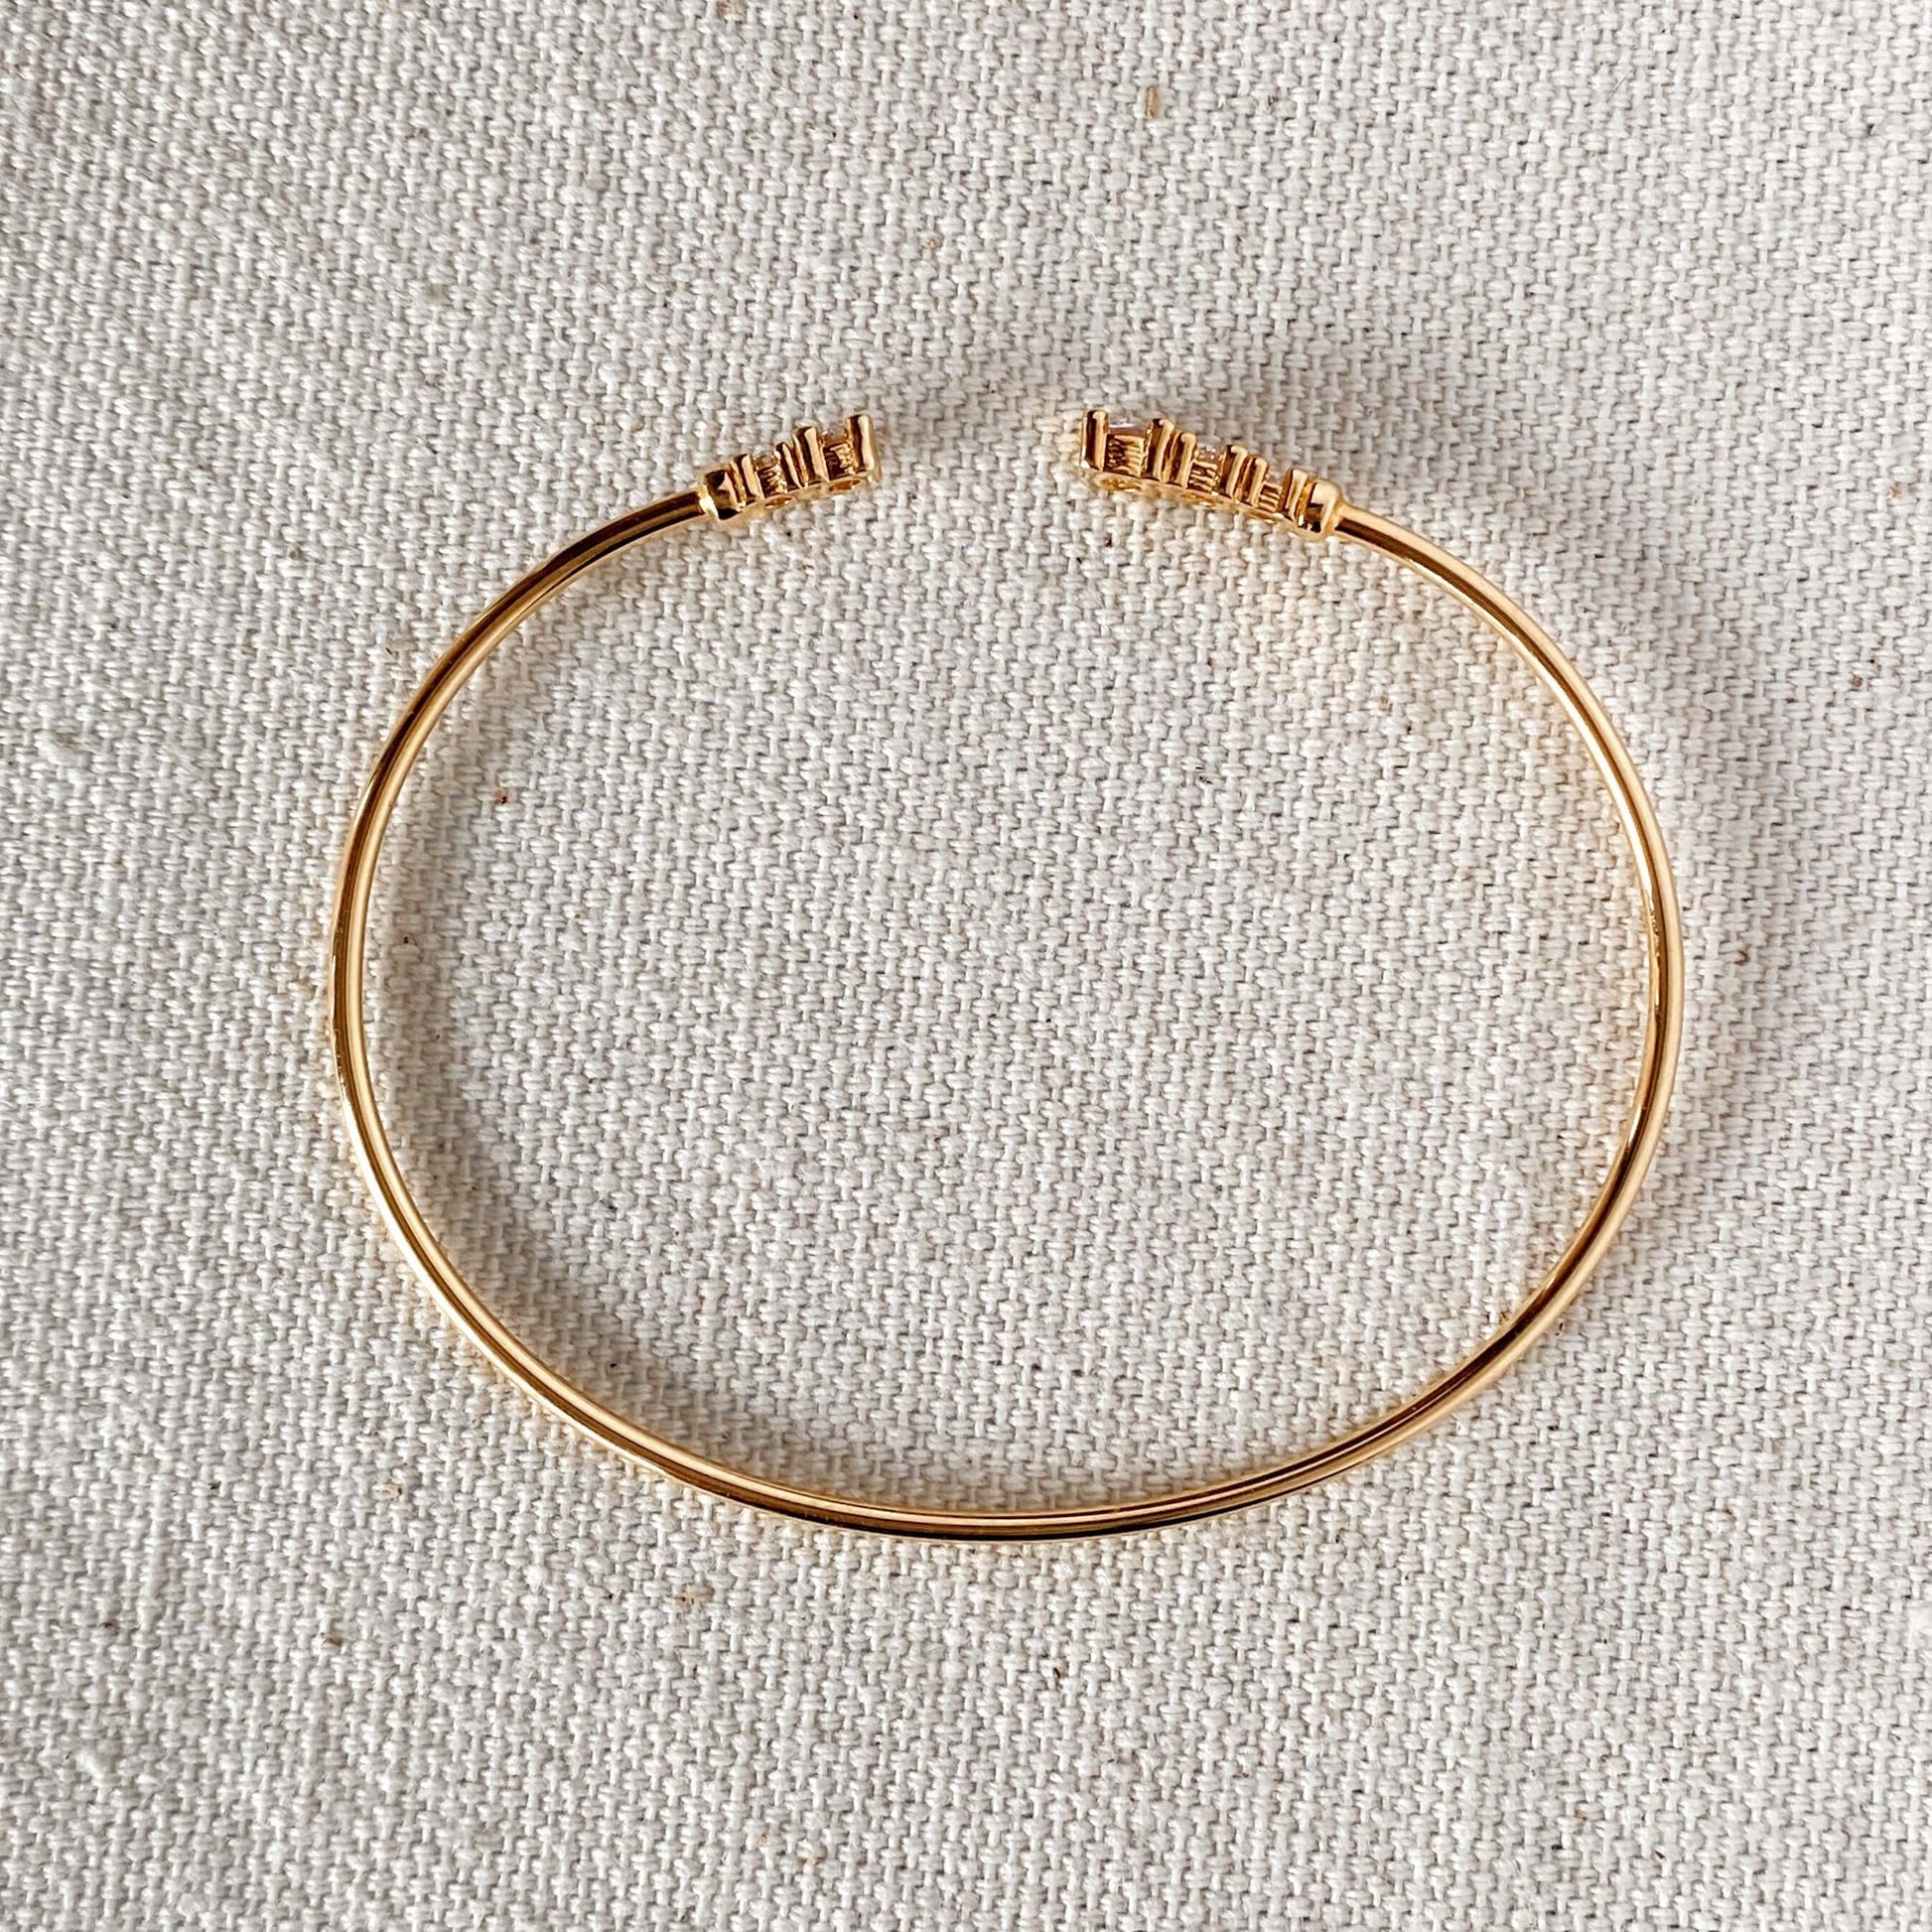 GoldFi Dainty 18k Gold Filled Cuff Bracelet with Cubic Zirconia Stones